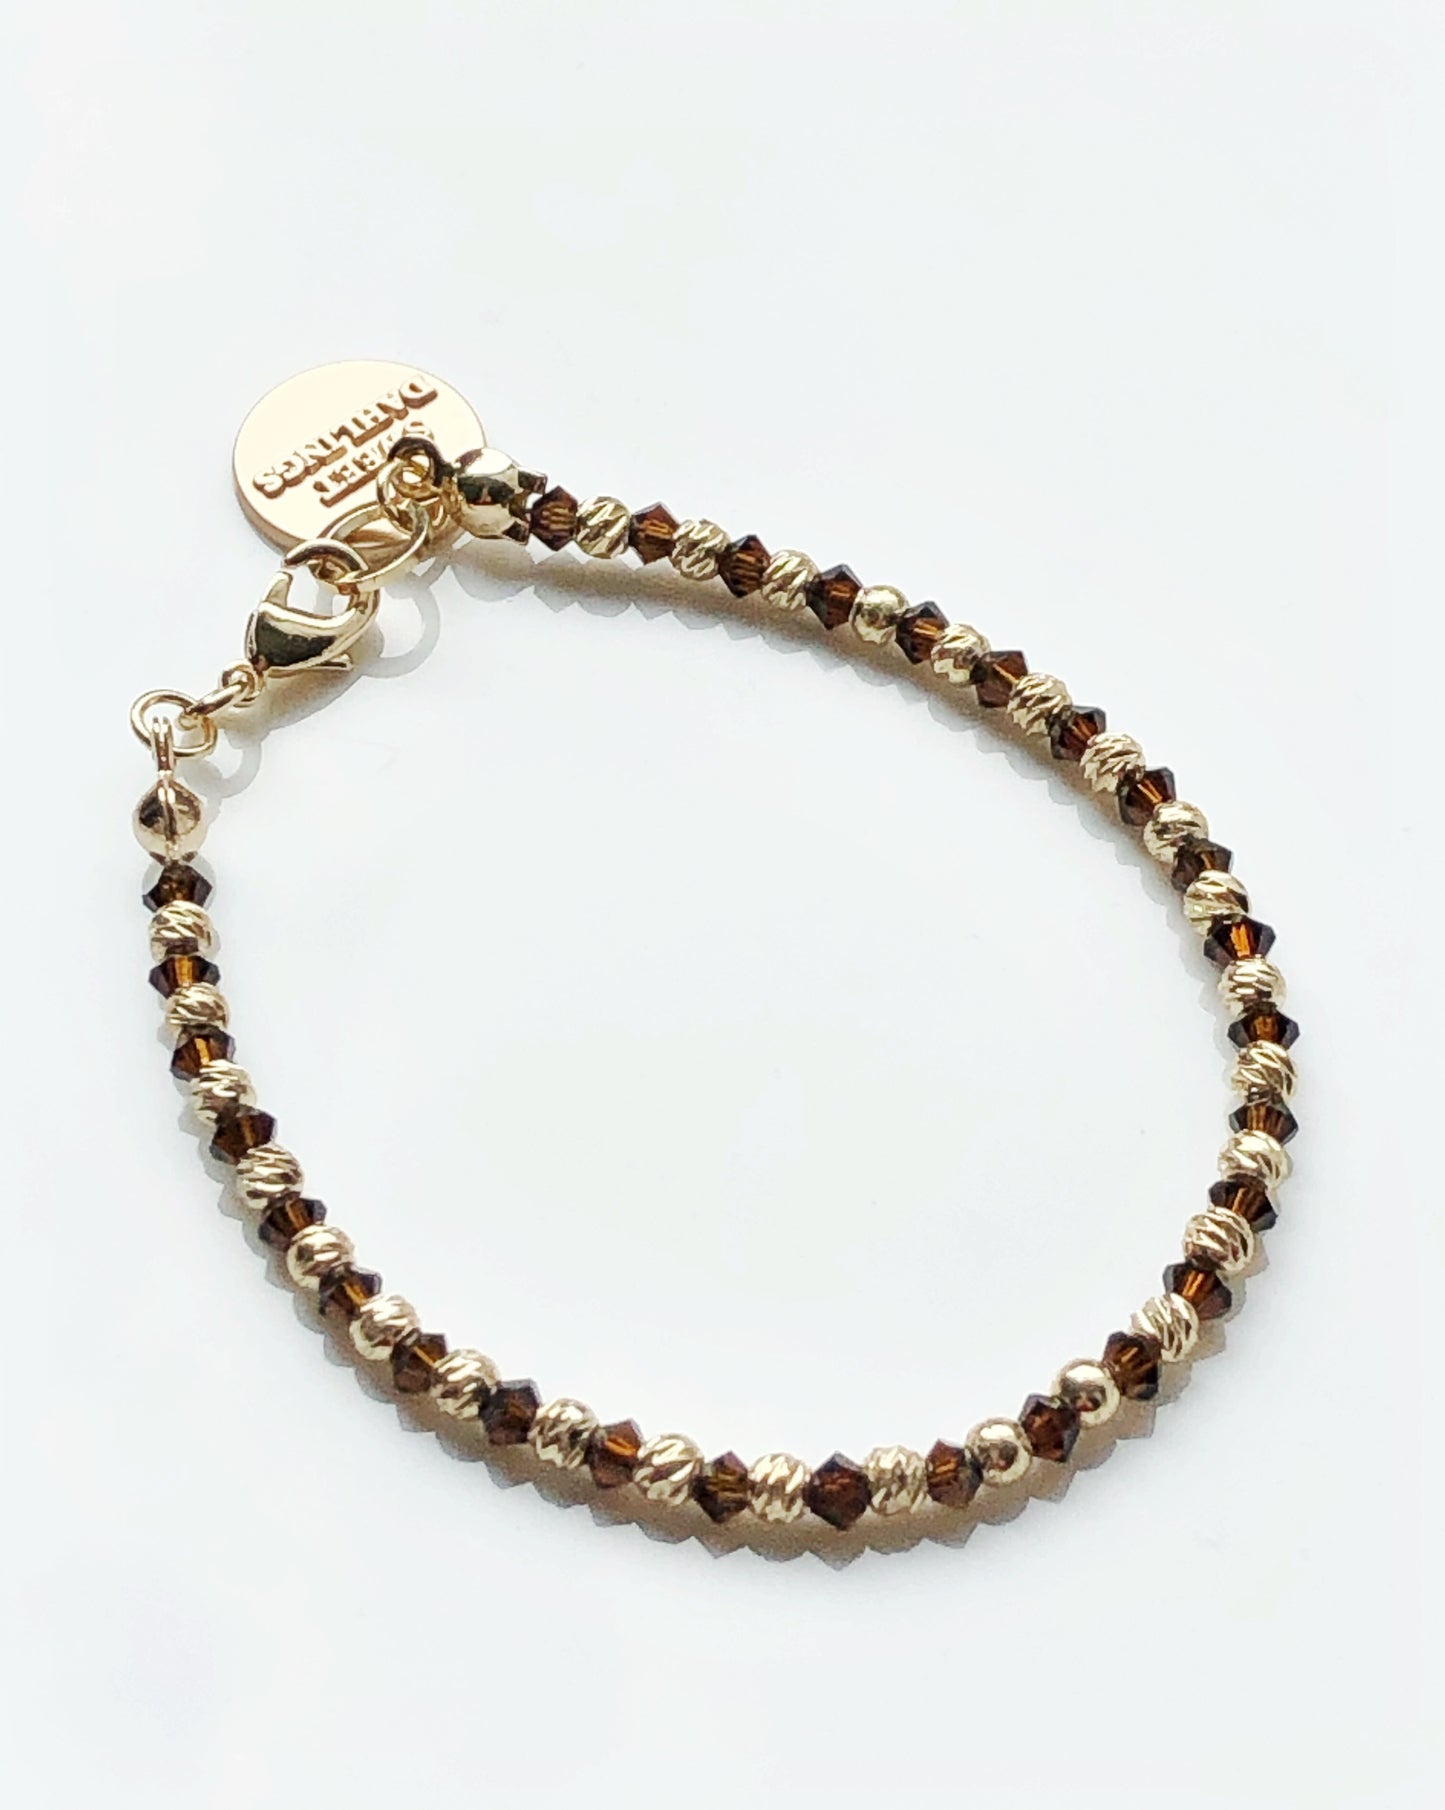 Swarovski crystals 14K gold plated beads bracelet in mocca and gold